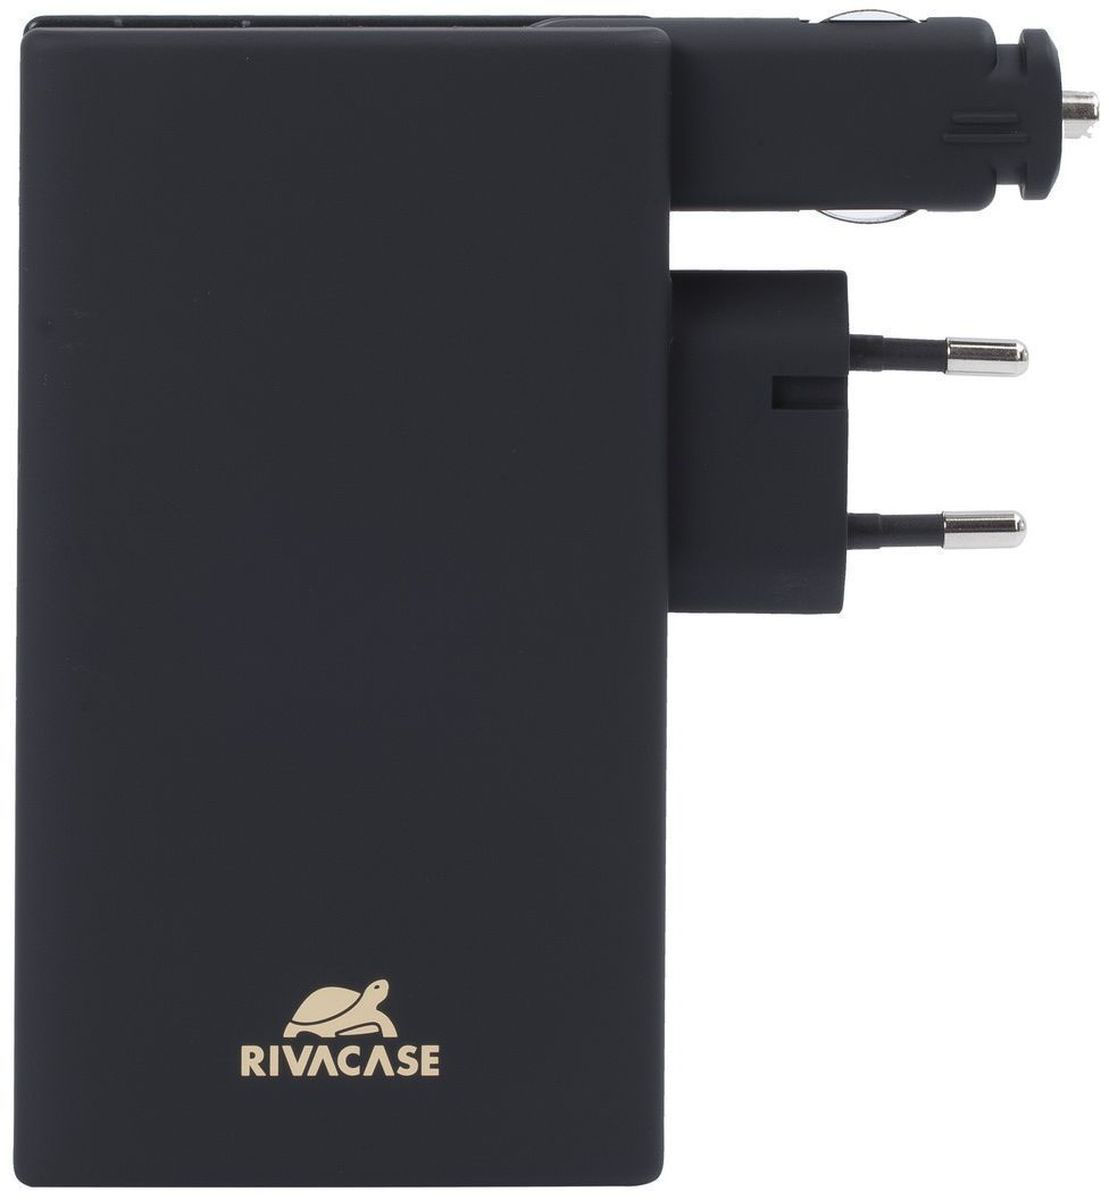 фото Rivapower VA4749, Black внешний аккумулятор (5000 мАч) Rivacase